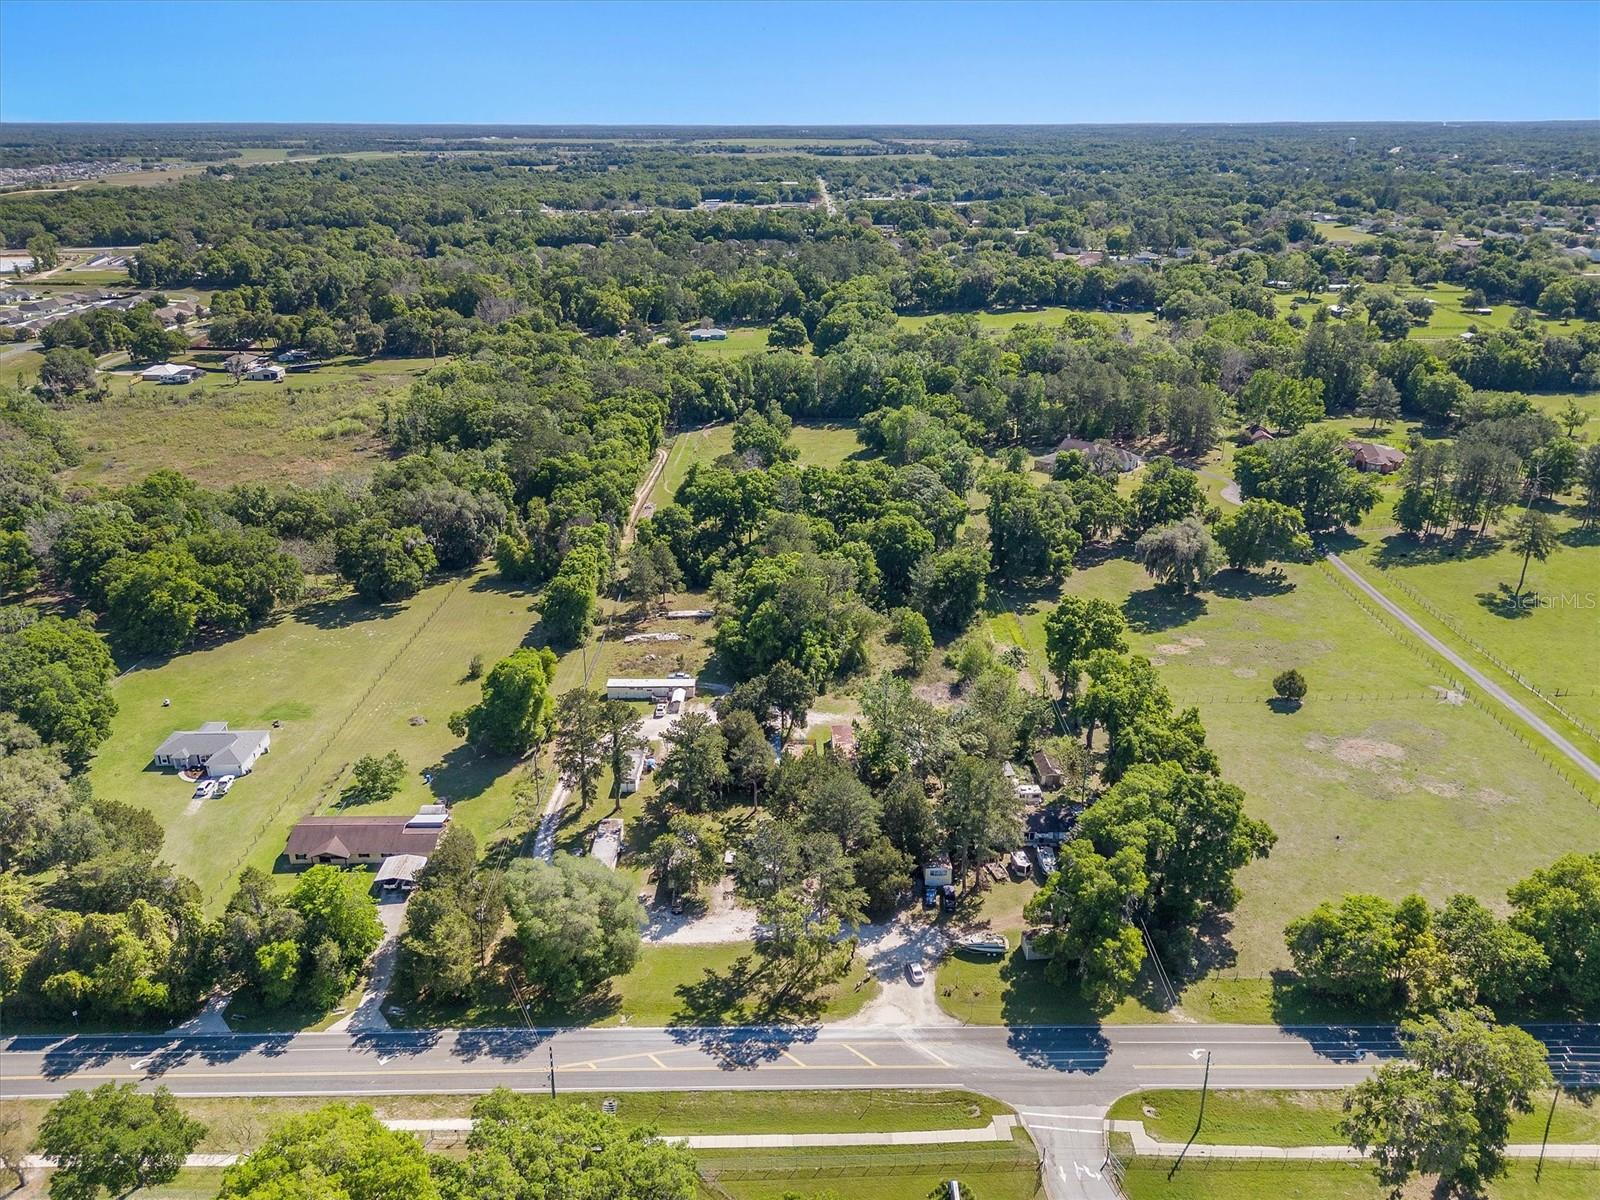 12 Unit Mobile Home Park For Sale near Ocala, FL $1,500,000